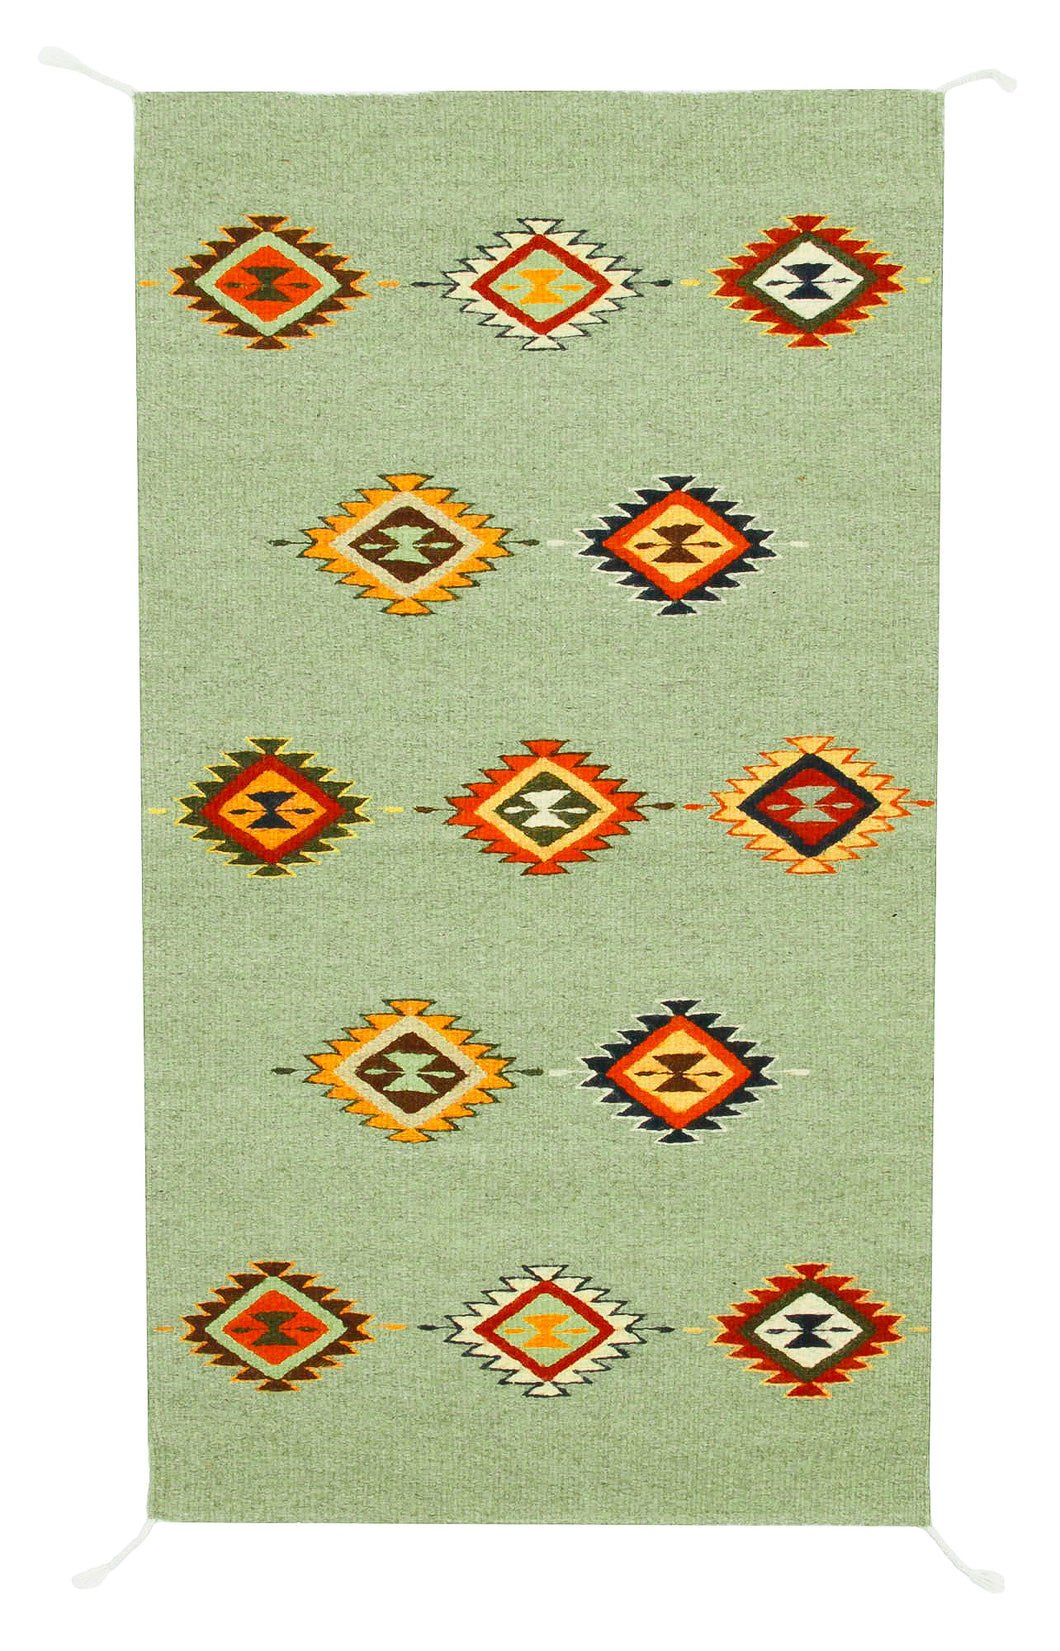 Handwoven Zapotec Indian Rug - Efrain's Diamonds Wool Oaxacan Textile